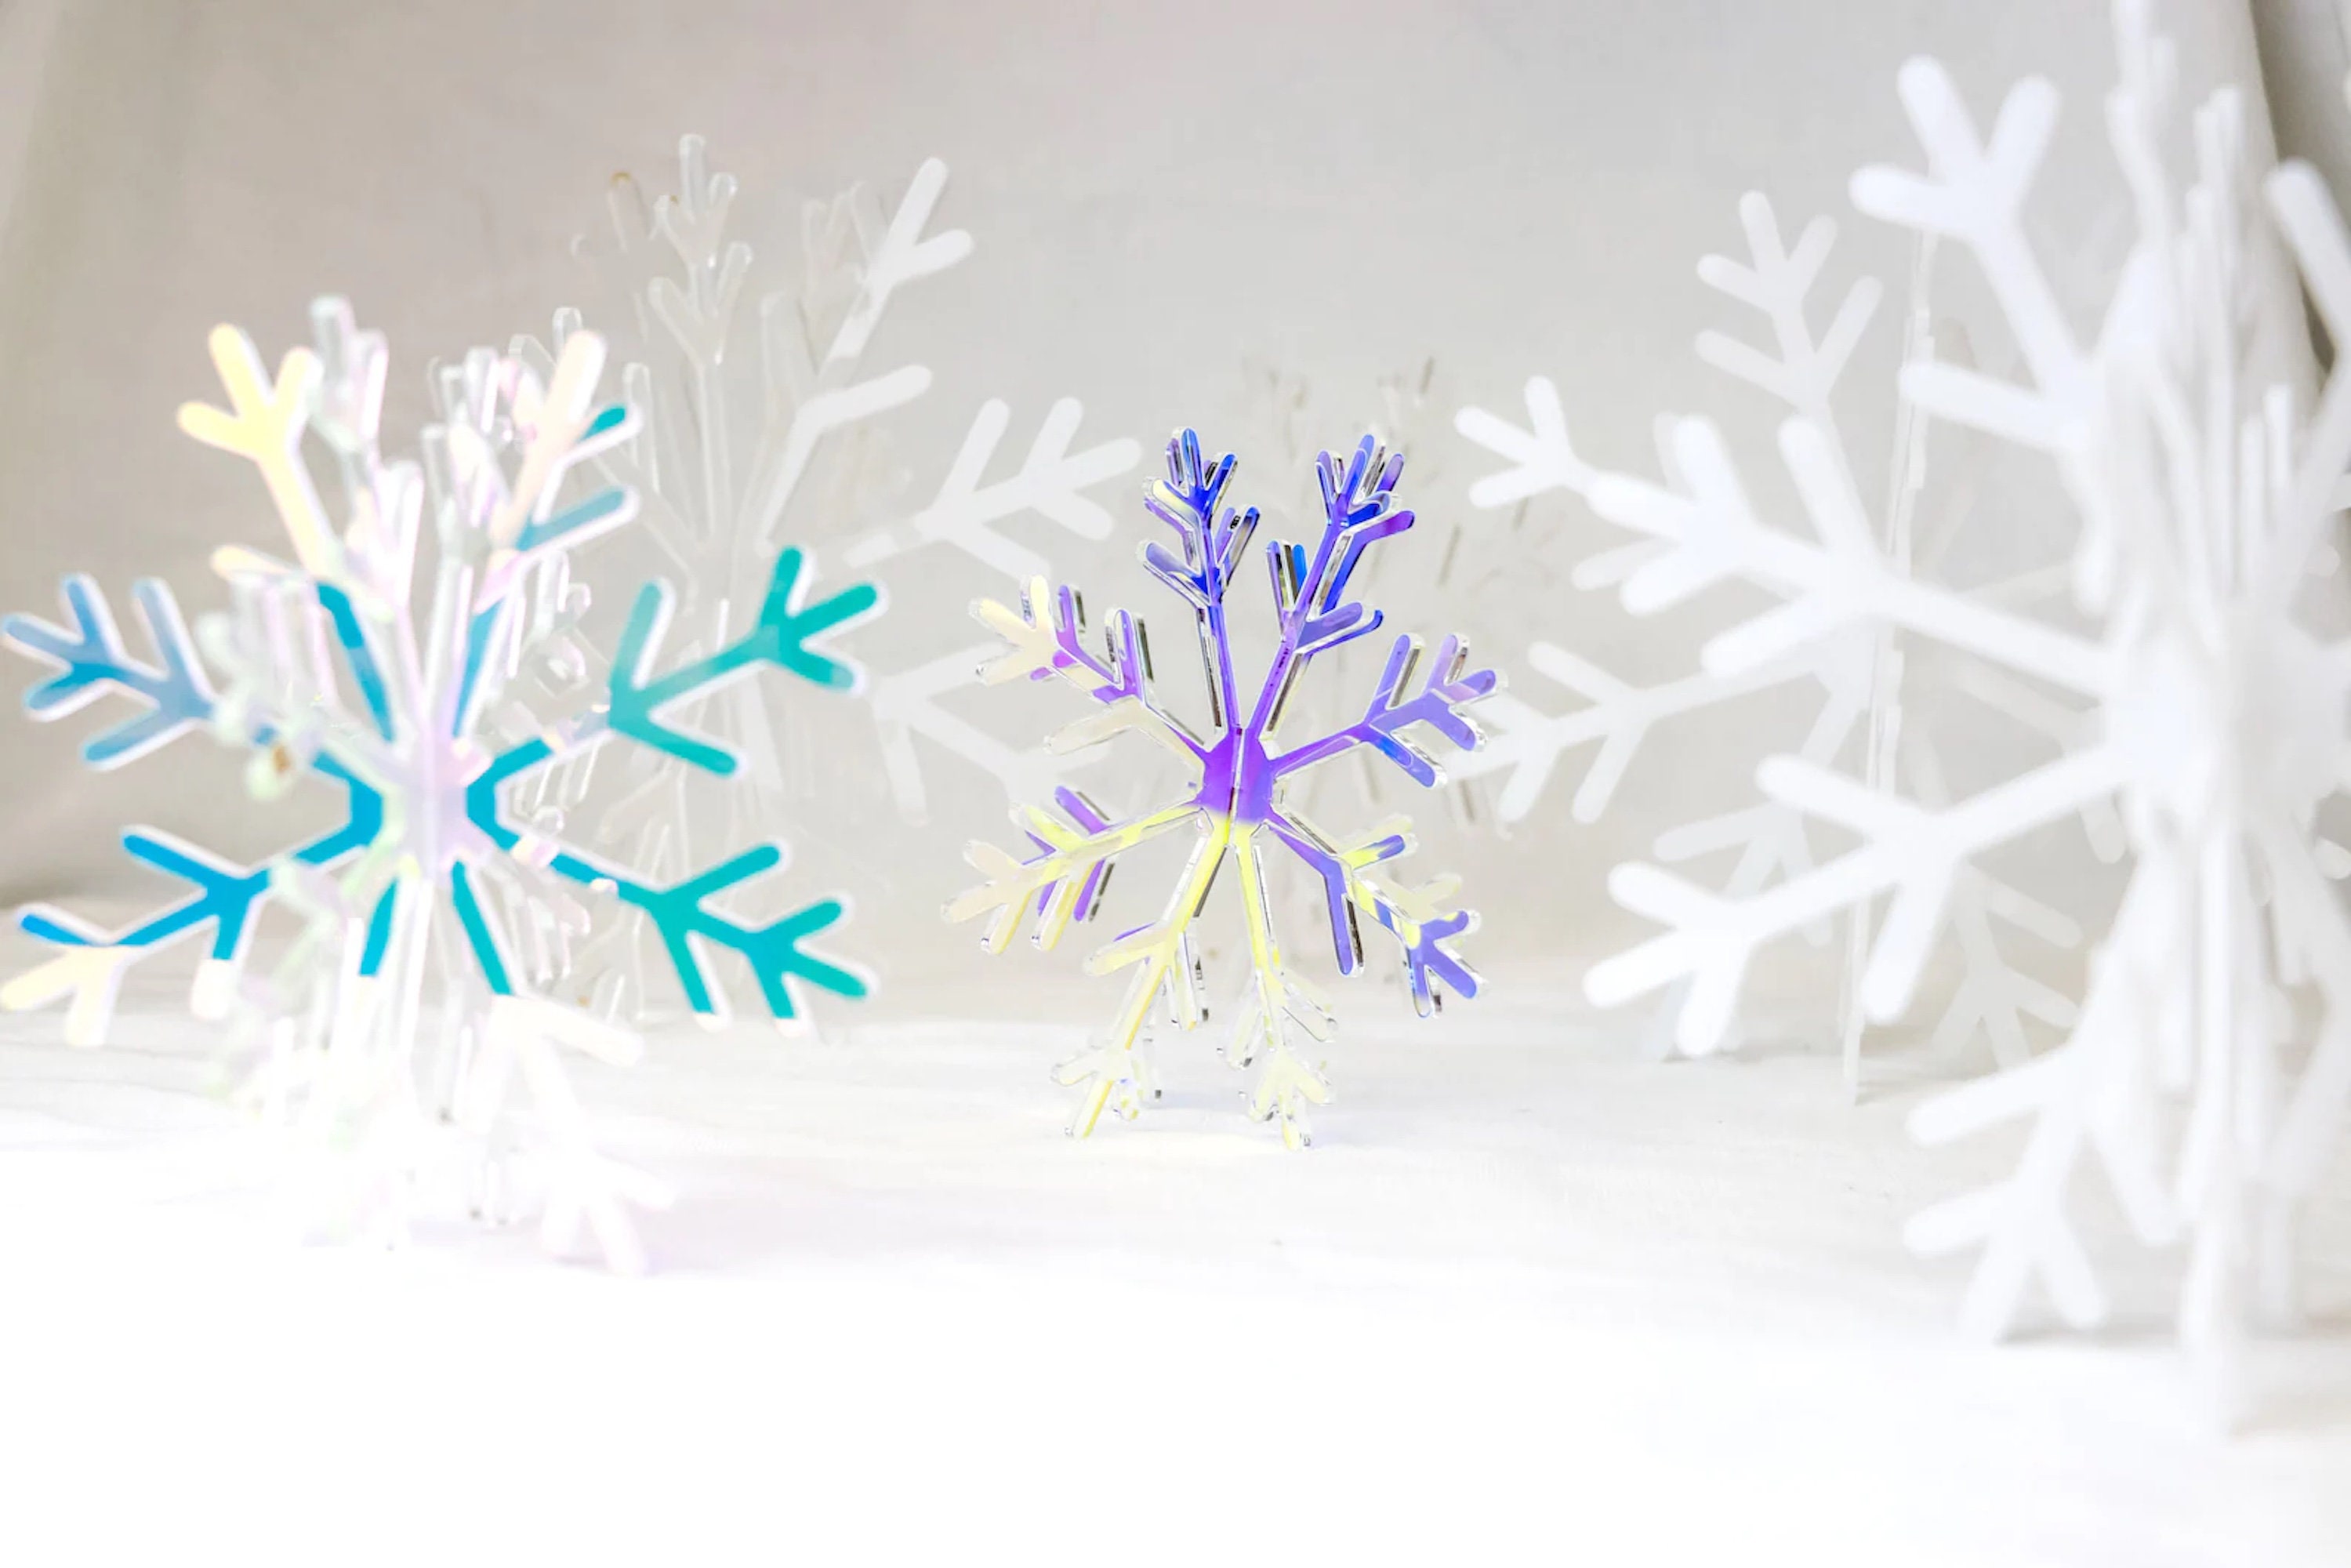 18Pcs 3D Hanging Christmas Snowflake Decorations, Nepal